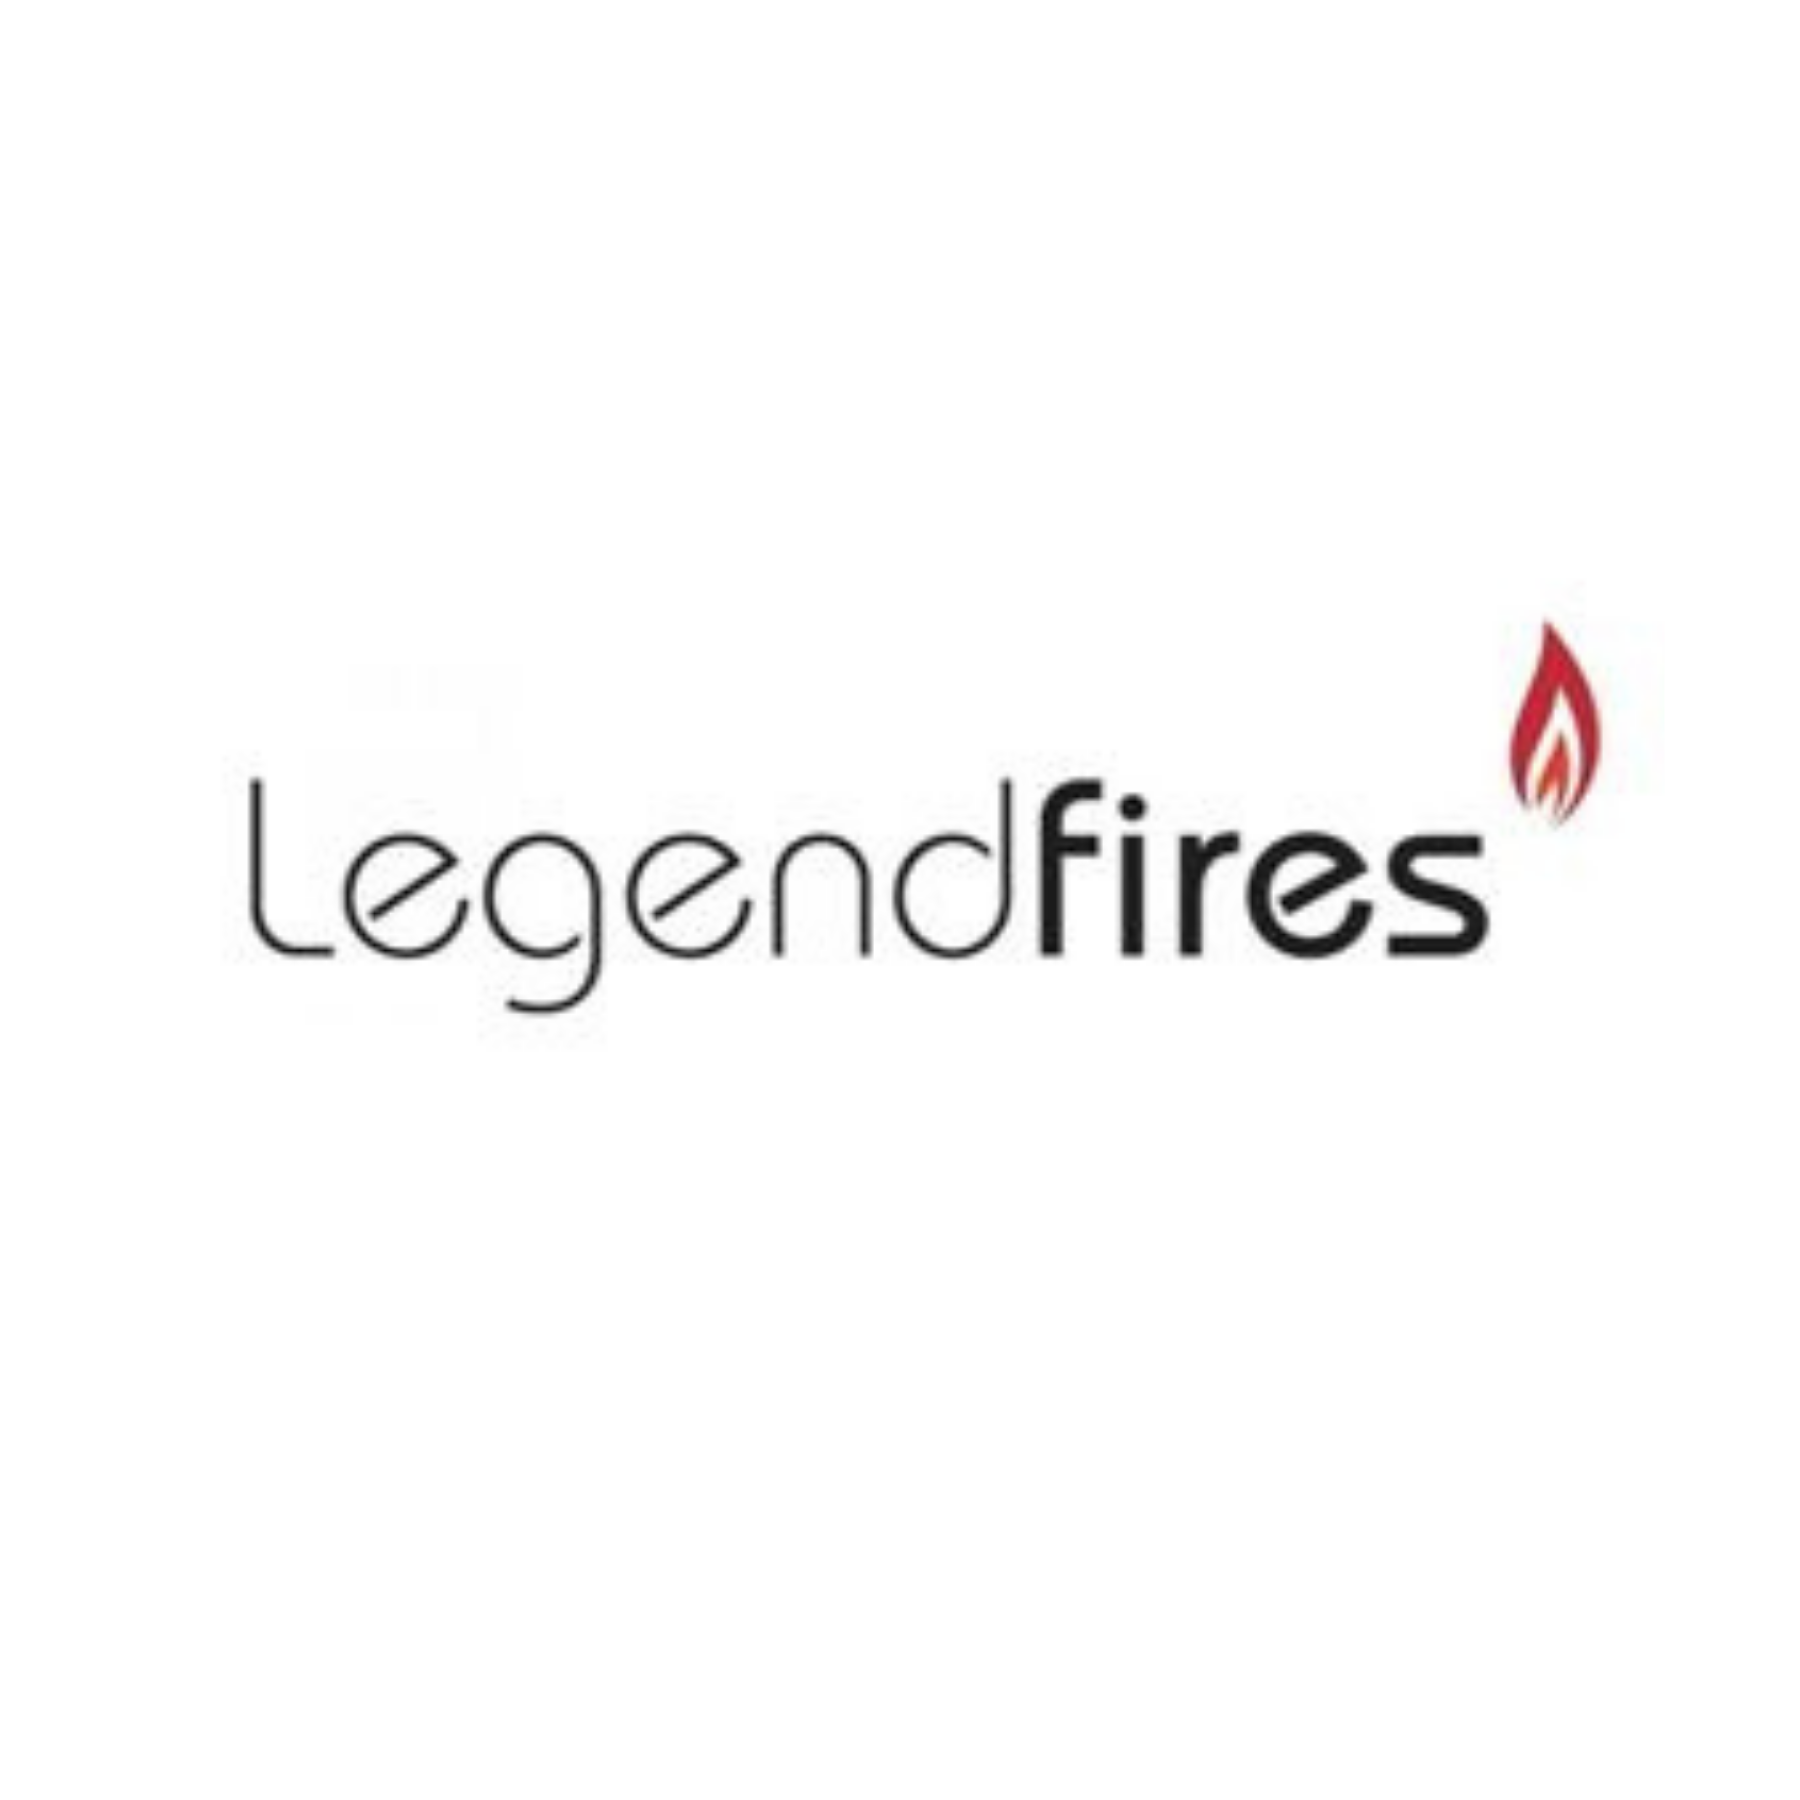 Legend fires